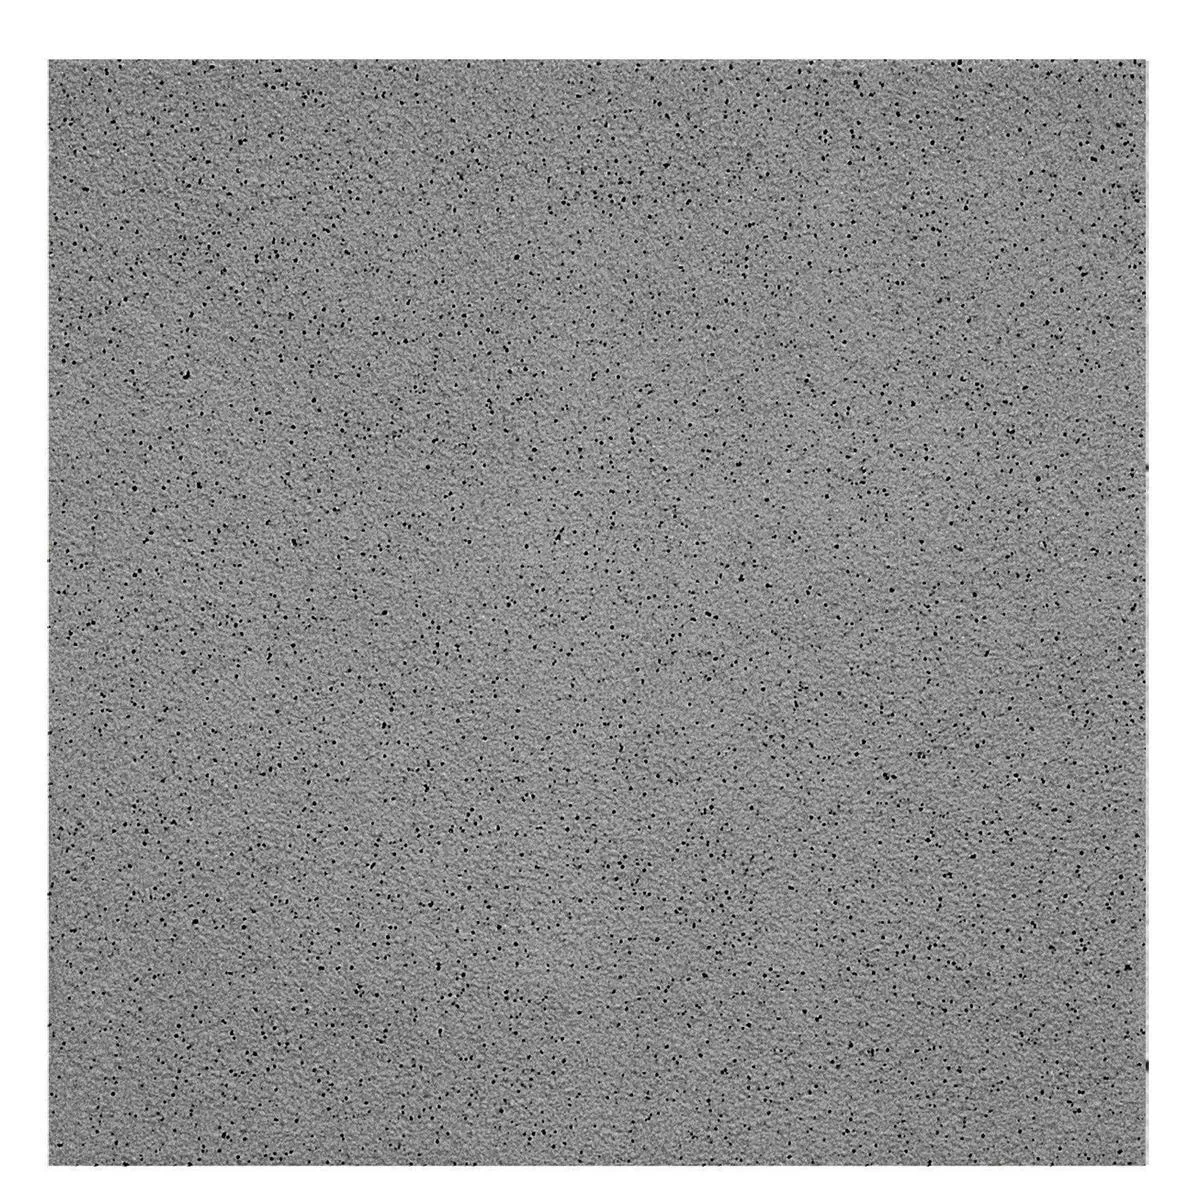 Muster Bodenfliese Feinkorn R10/A Anthrazit 15x15cm